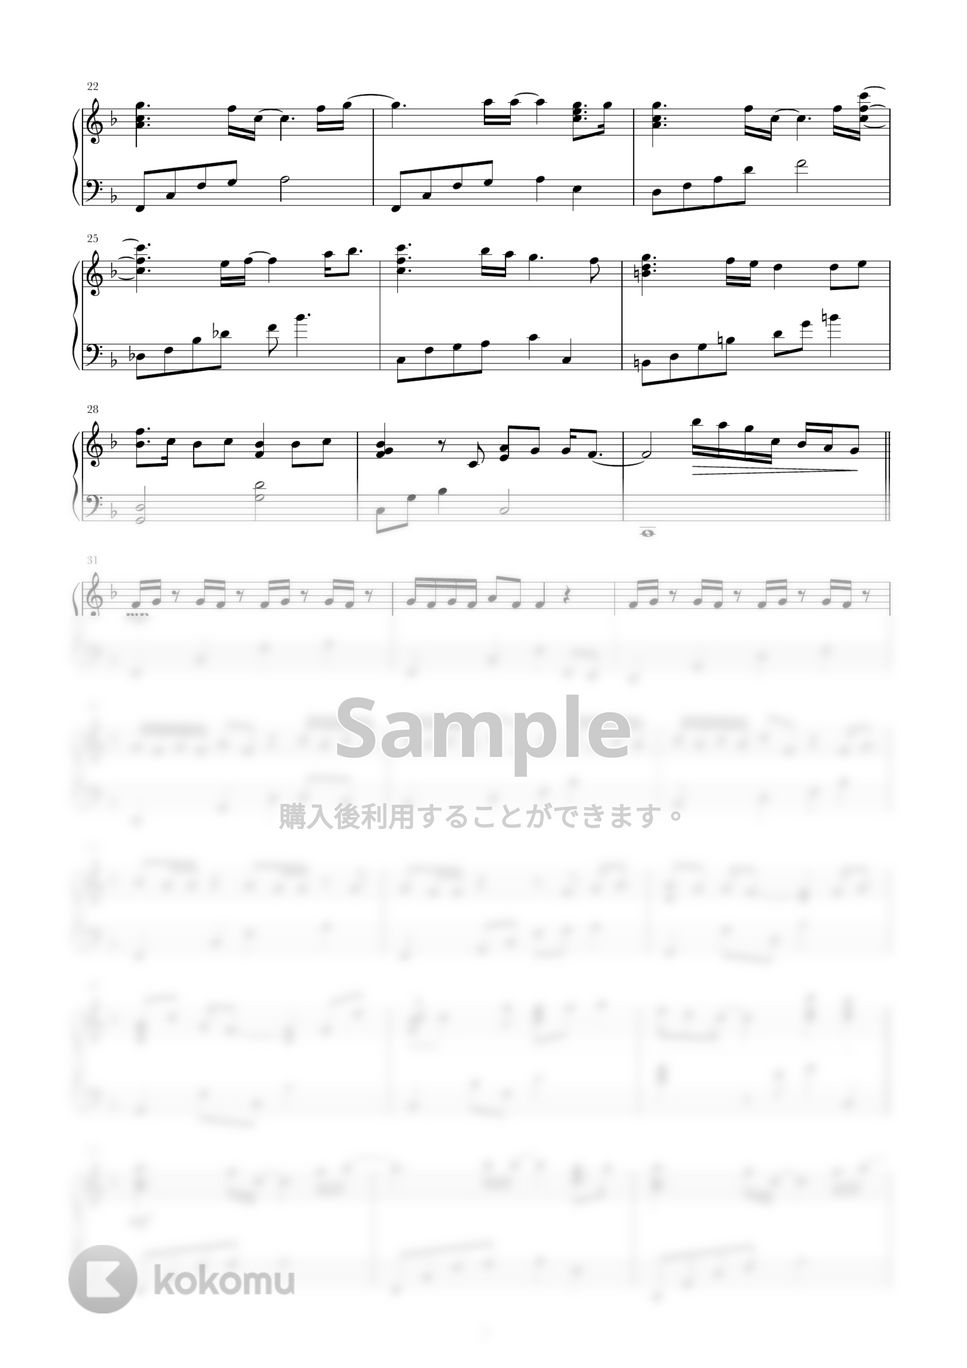 JO1 - Prologue (ピアノソロ) by harupi